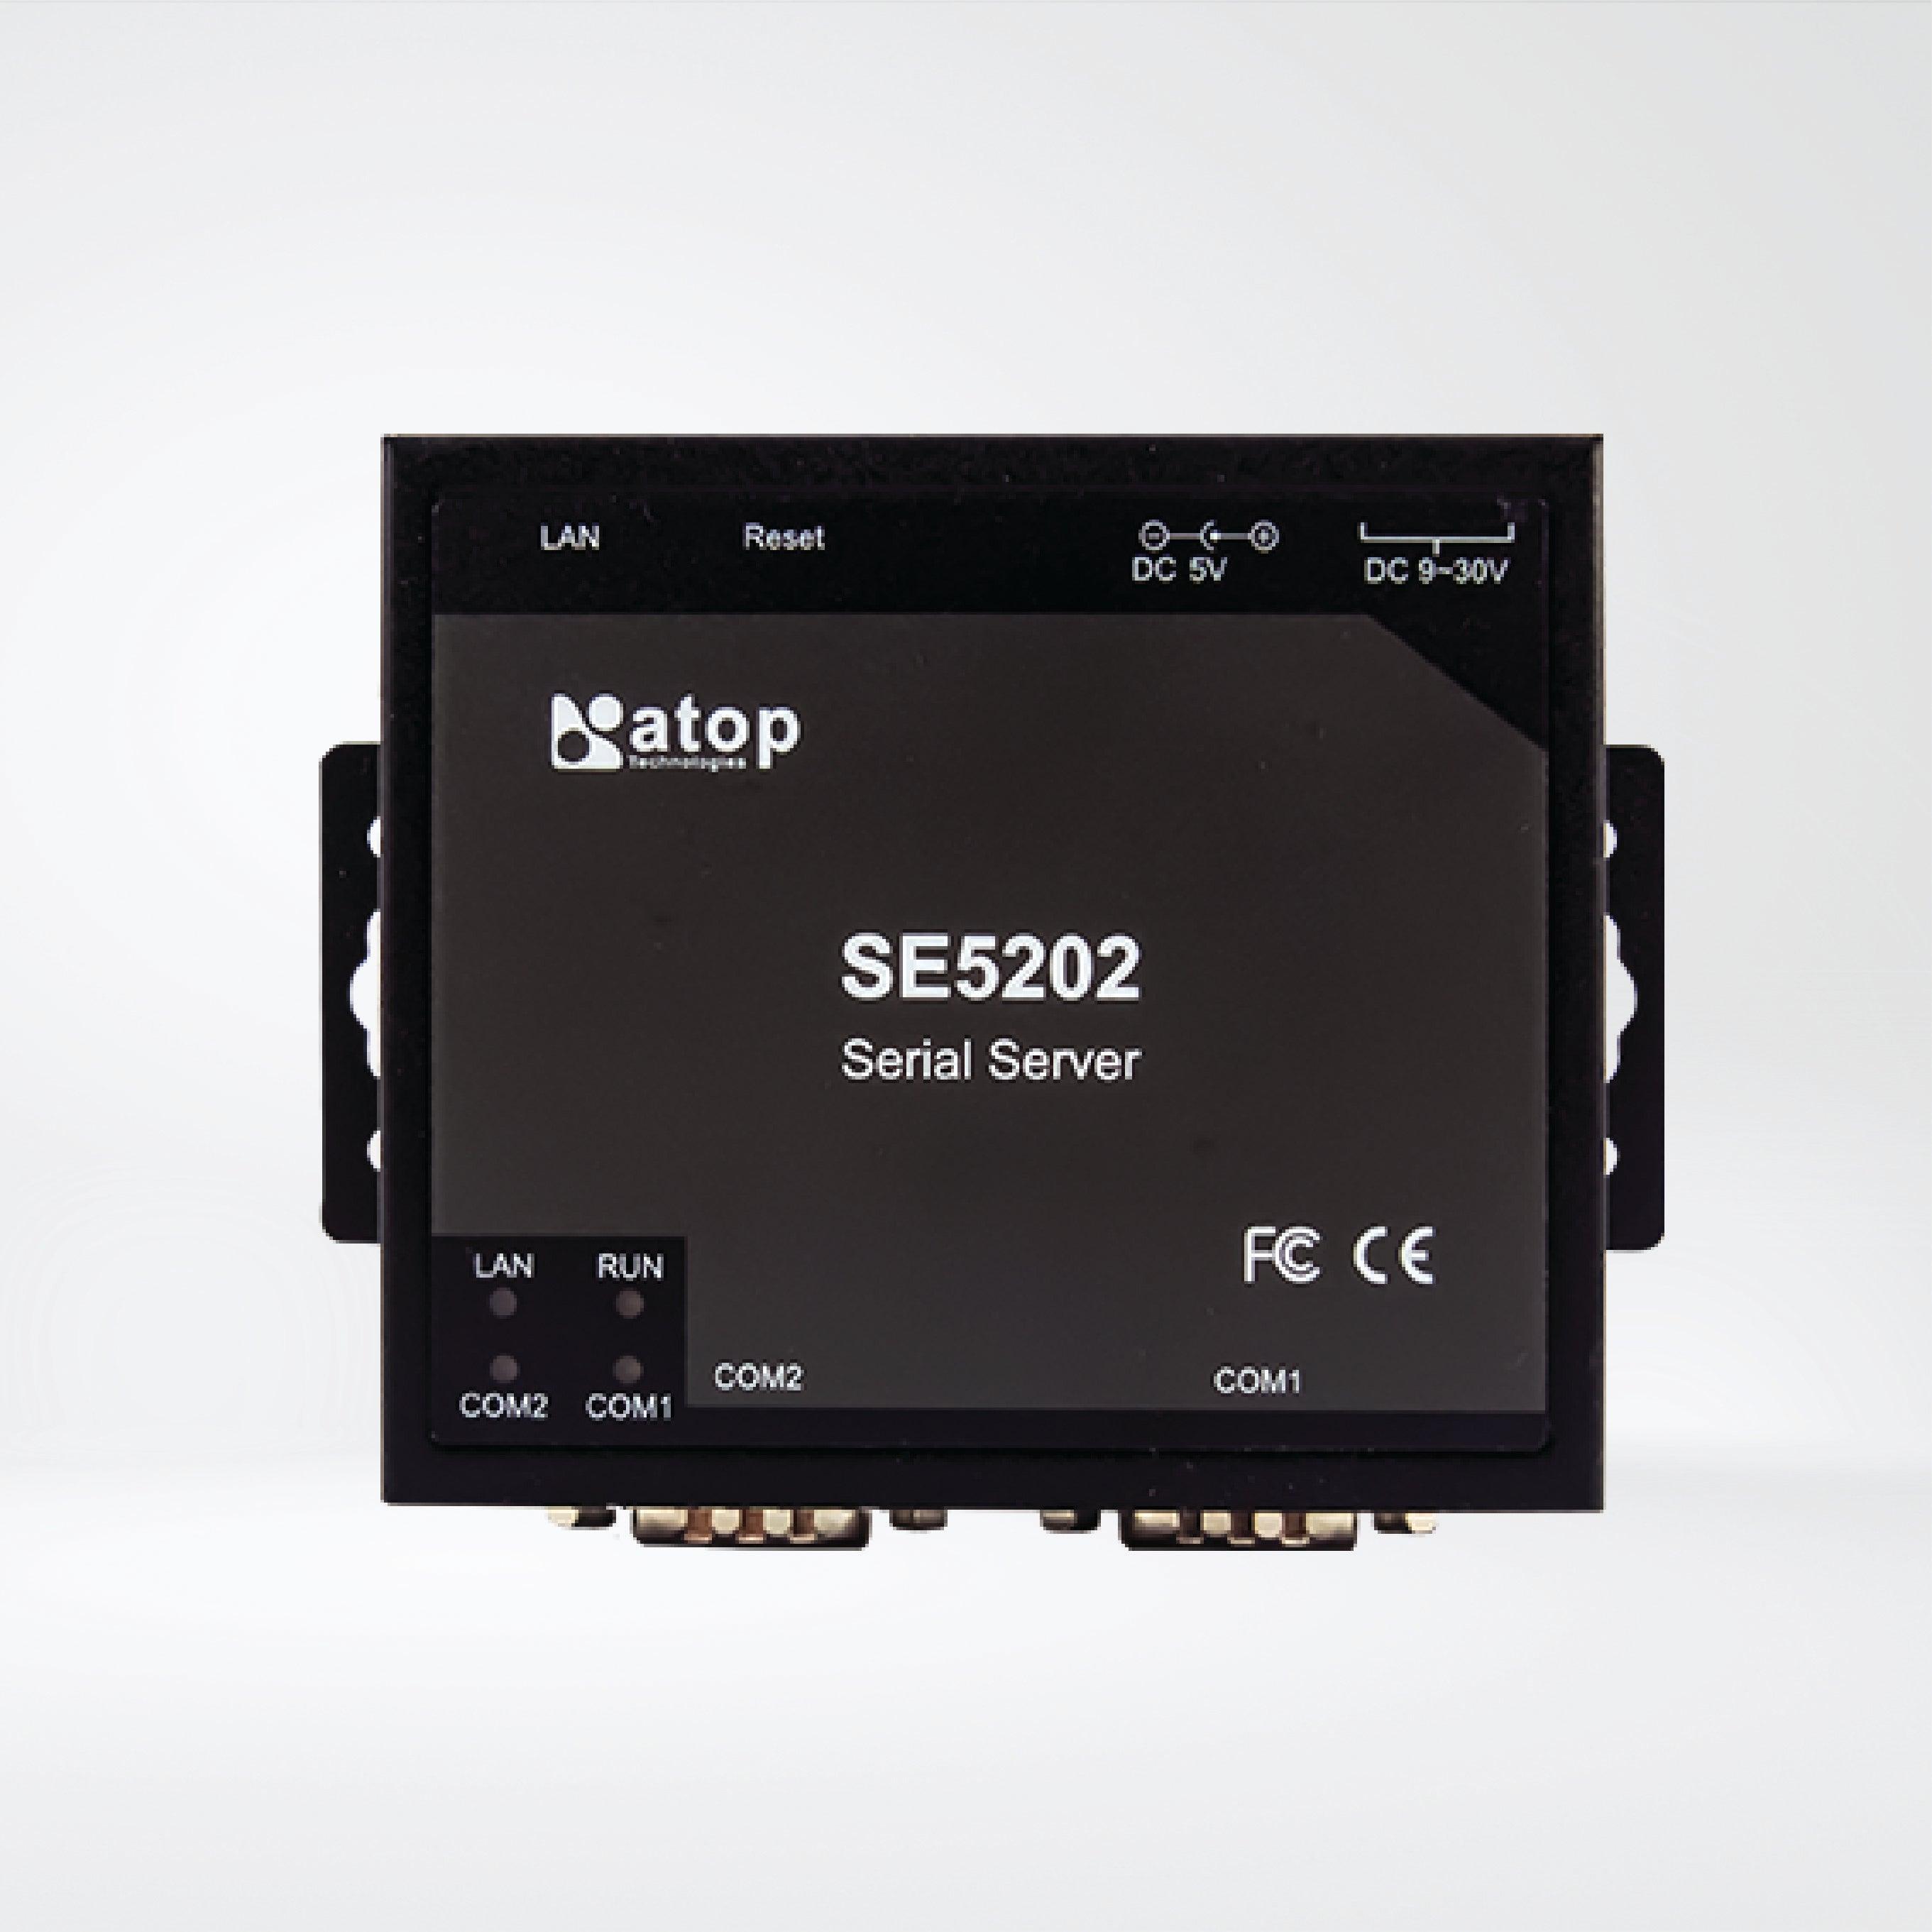 SE5202-SFP-TB Compact 2-Port Industrial Serial Device Server, Field-Mount - Riverplus